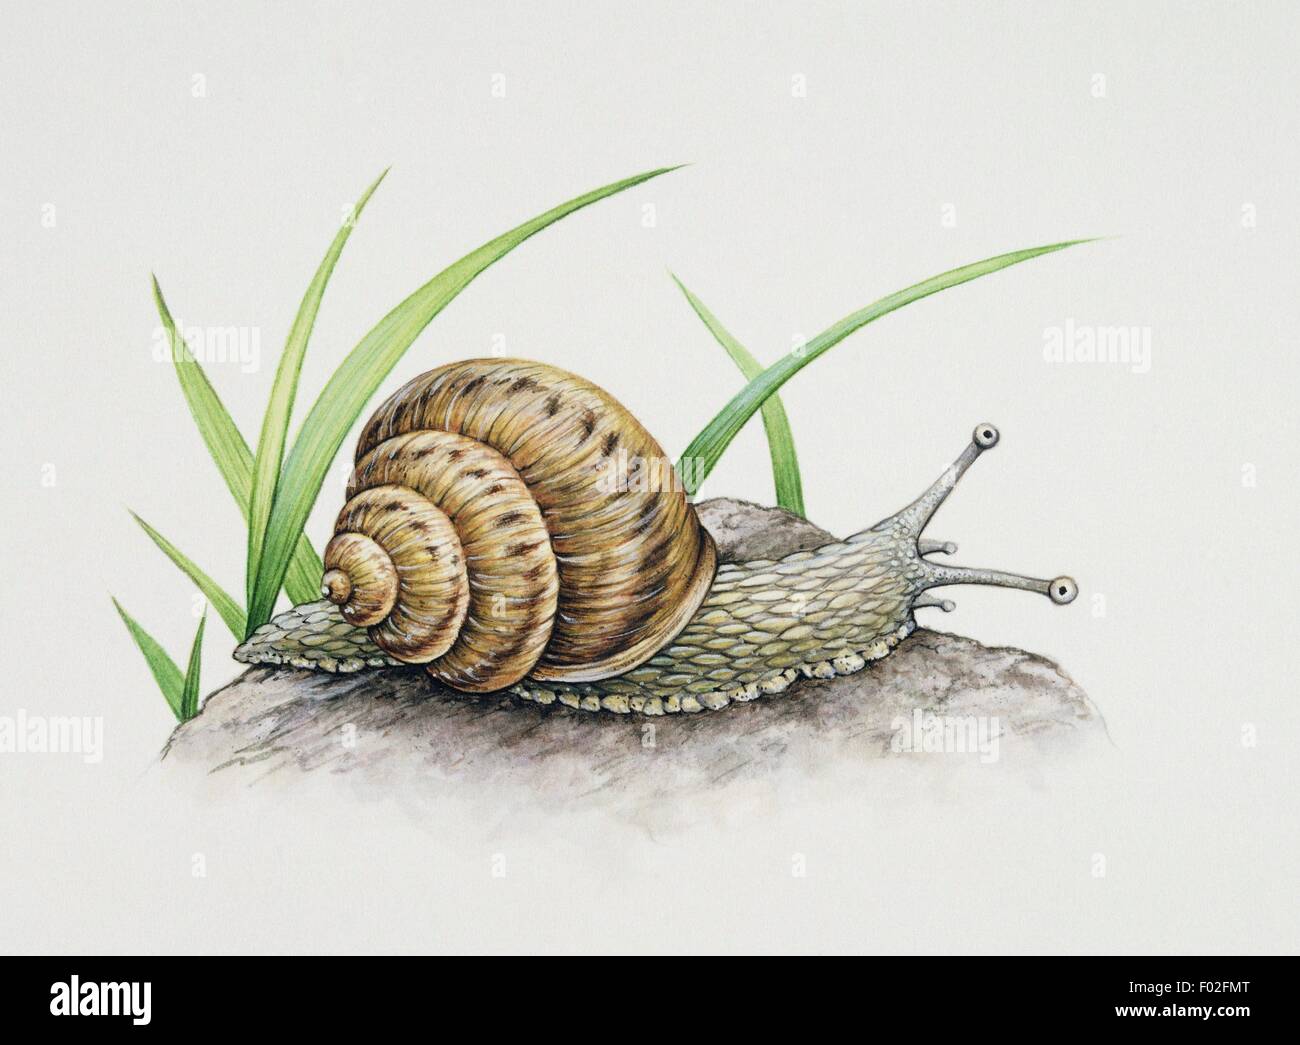 Pleurotomaria sp, Pleurotomariidae, primitive snail. Artwork by Angela Hargreaves. Stock Photo